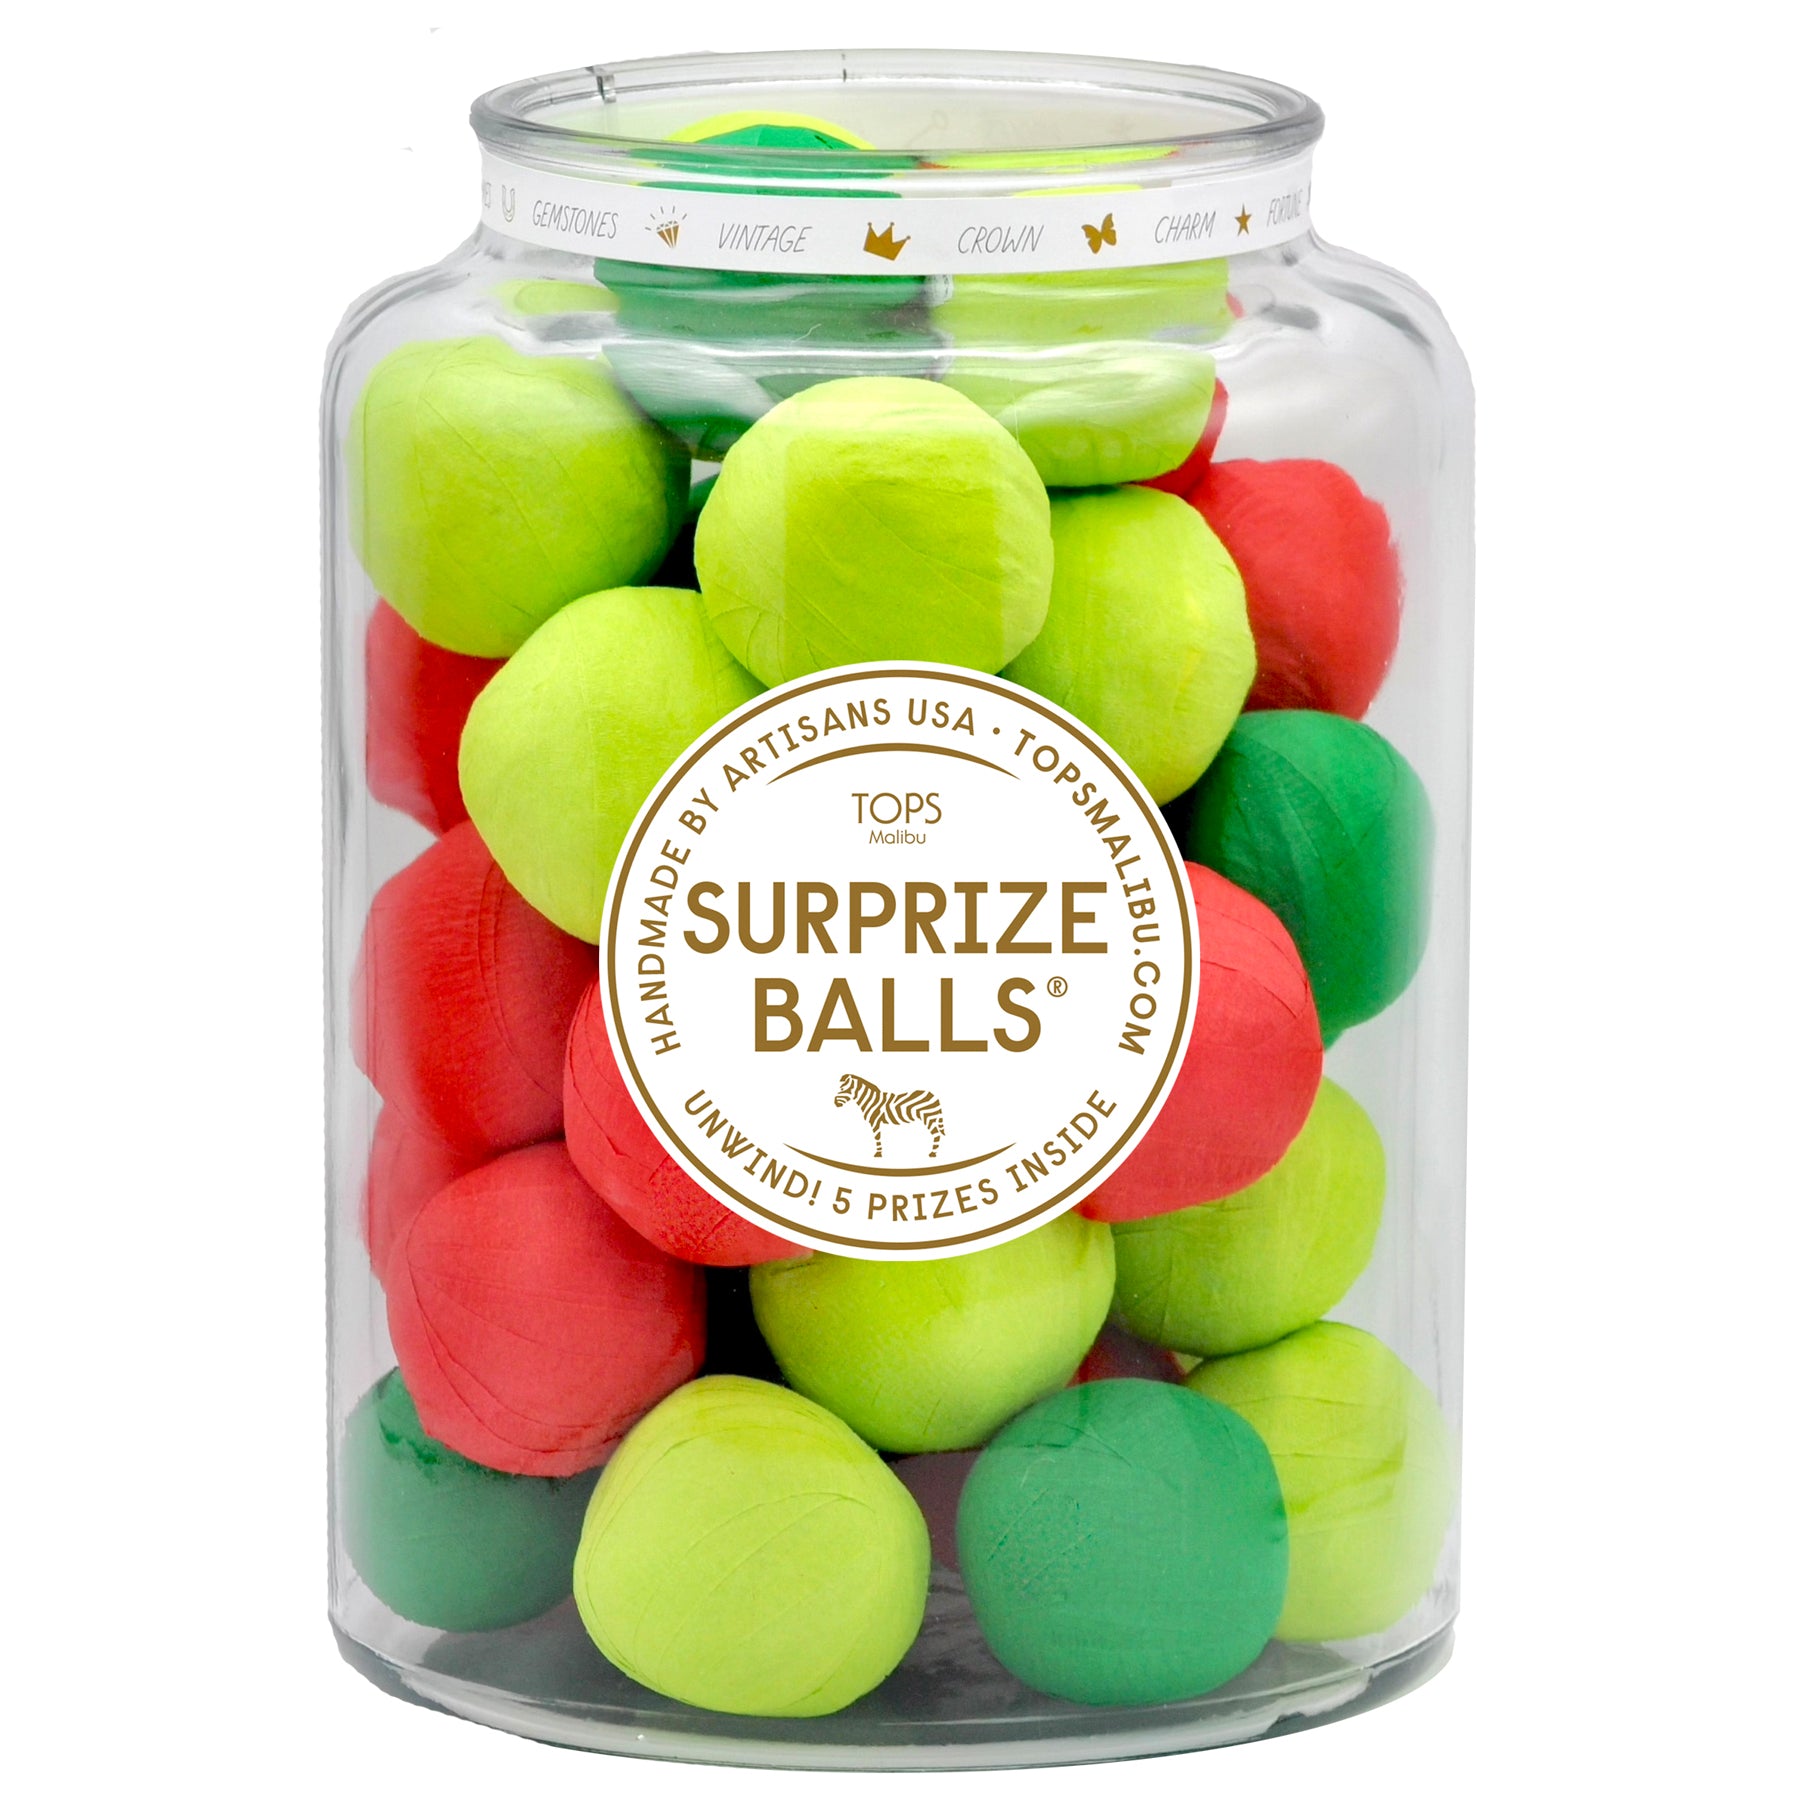 4th of July Mini Surprise Balls - TOPS Malibu